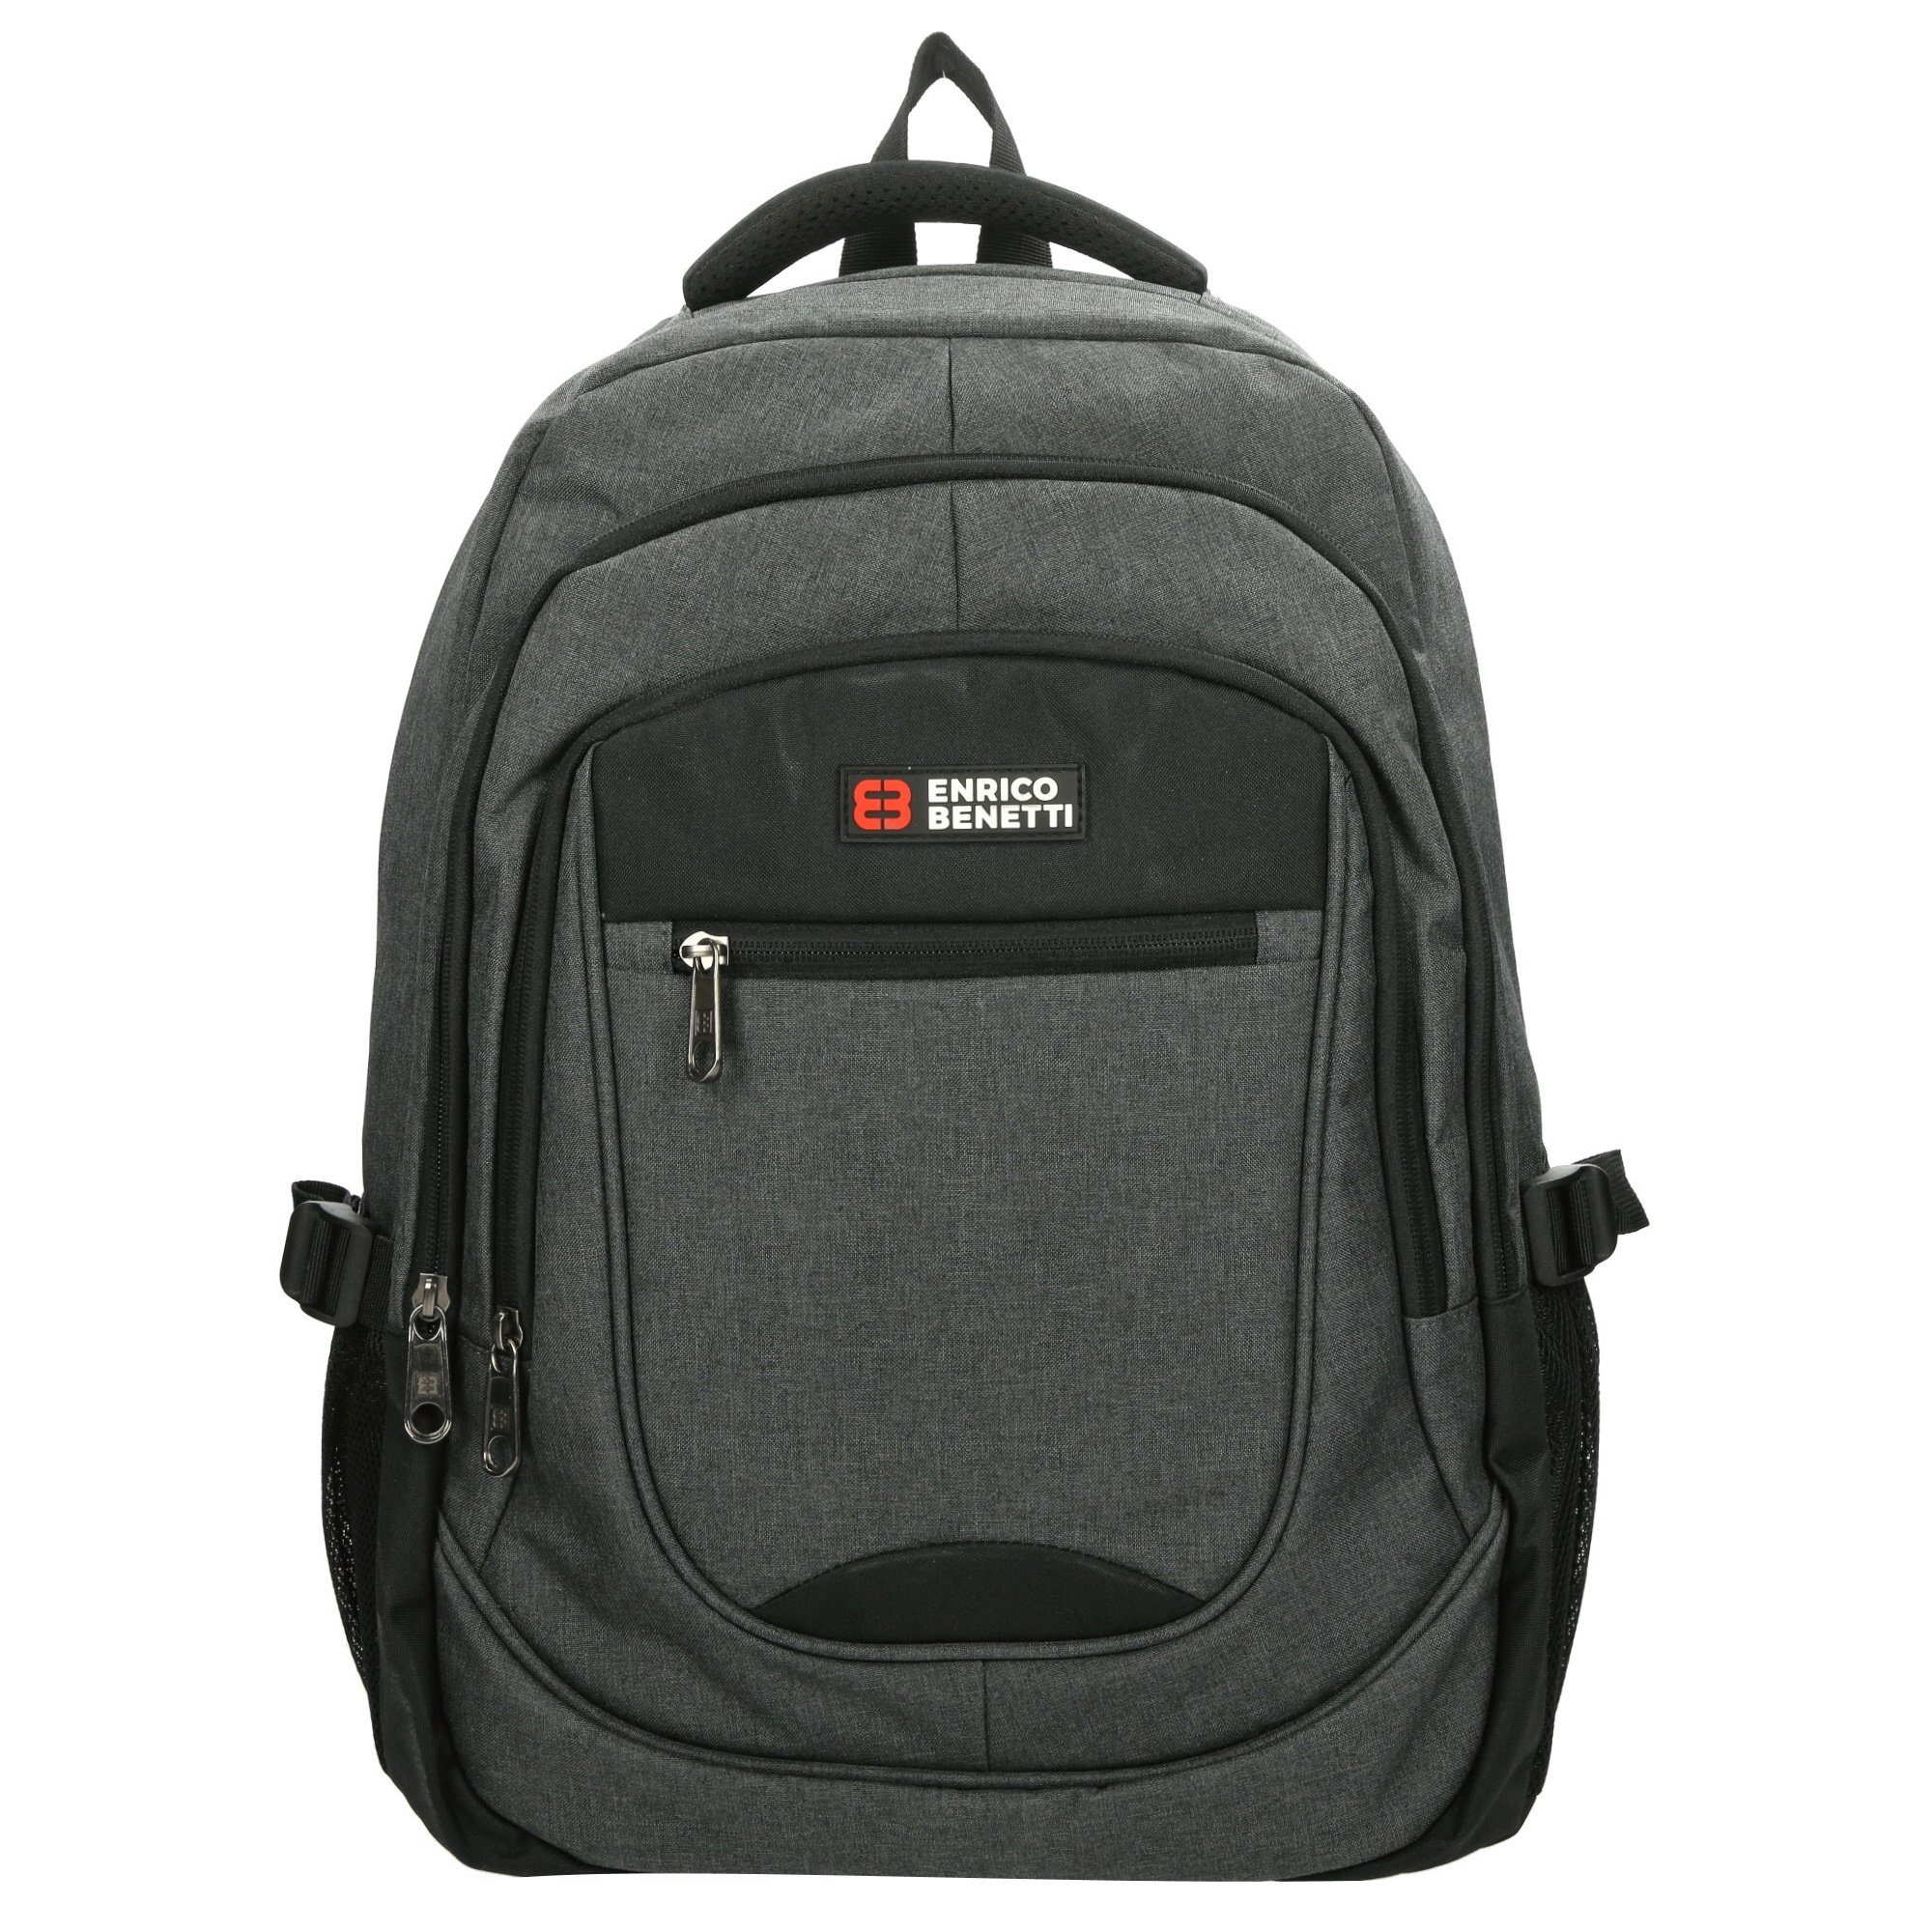 Notebooktasche Grau Backpack, HTI-Living Laptoprucksack Laptoprucksack